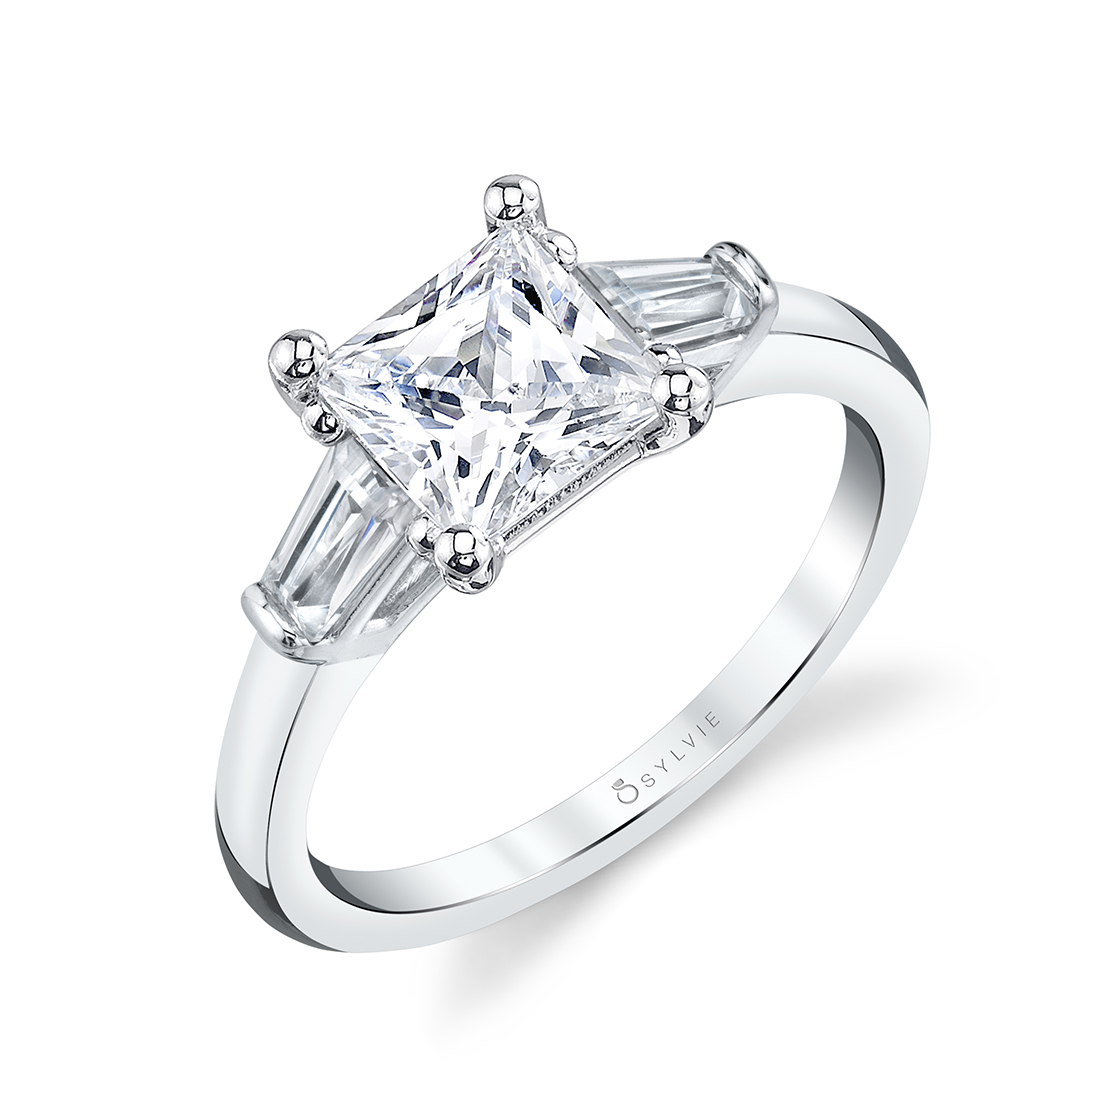 Round Cut White & Baguette Cut Diamond Ring Three Stone Engagement Ring Anniversary Diamond Ring Wedding Ring CZ White Diamond Ring